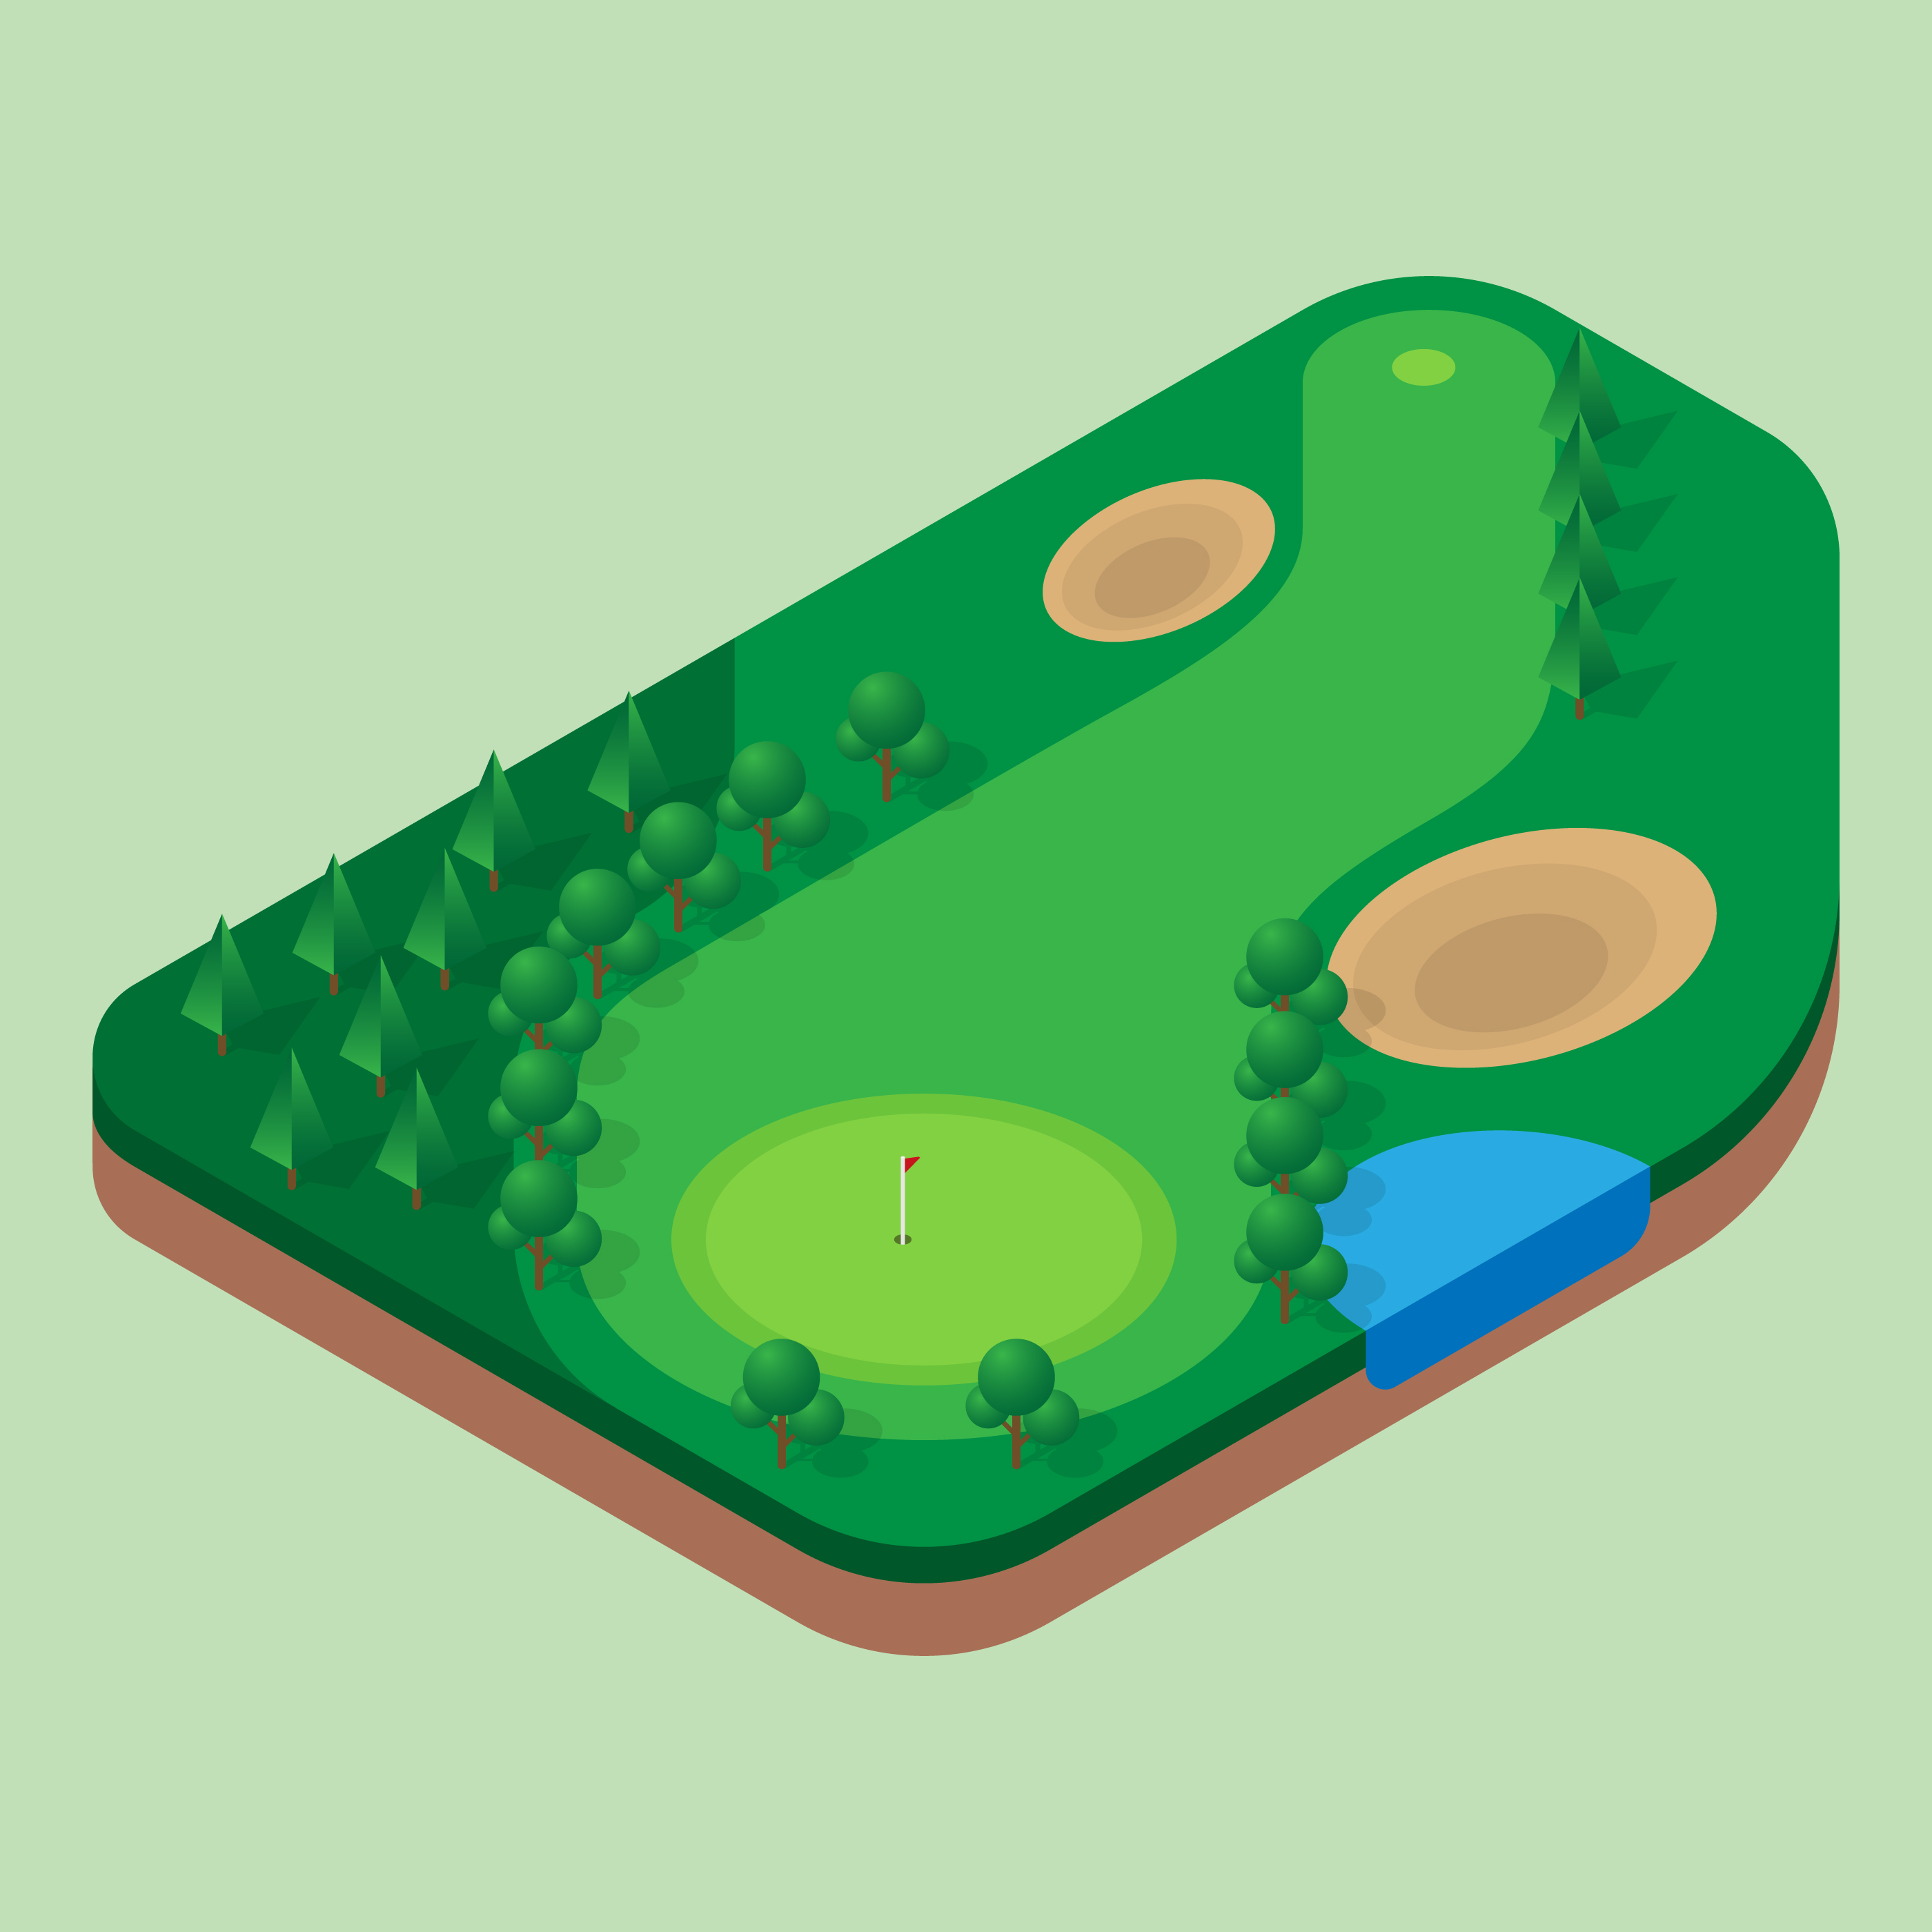 Download Golf Course Aerial Illustrations - Download Free Vectors, Clipart Graphics & Vector Art